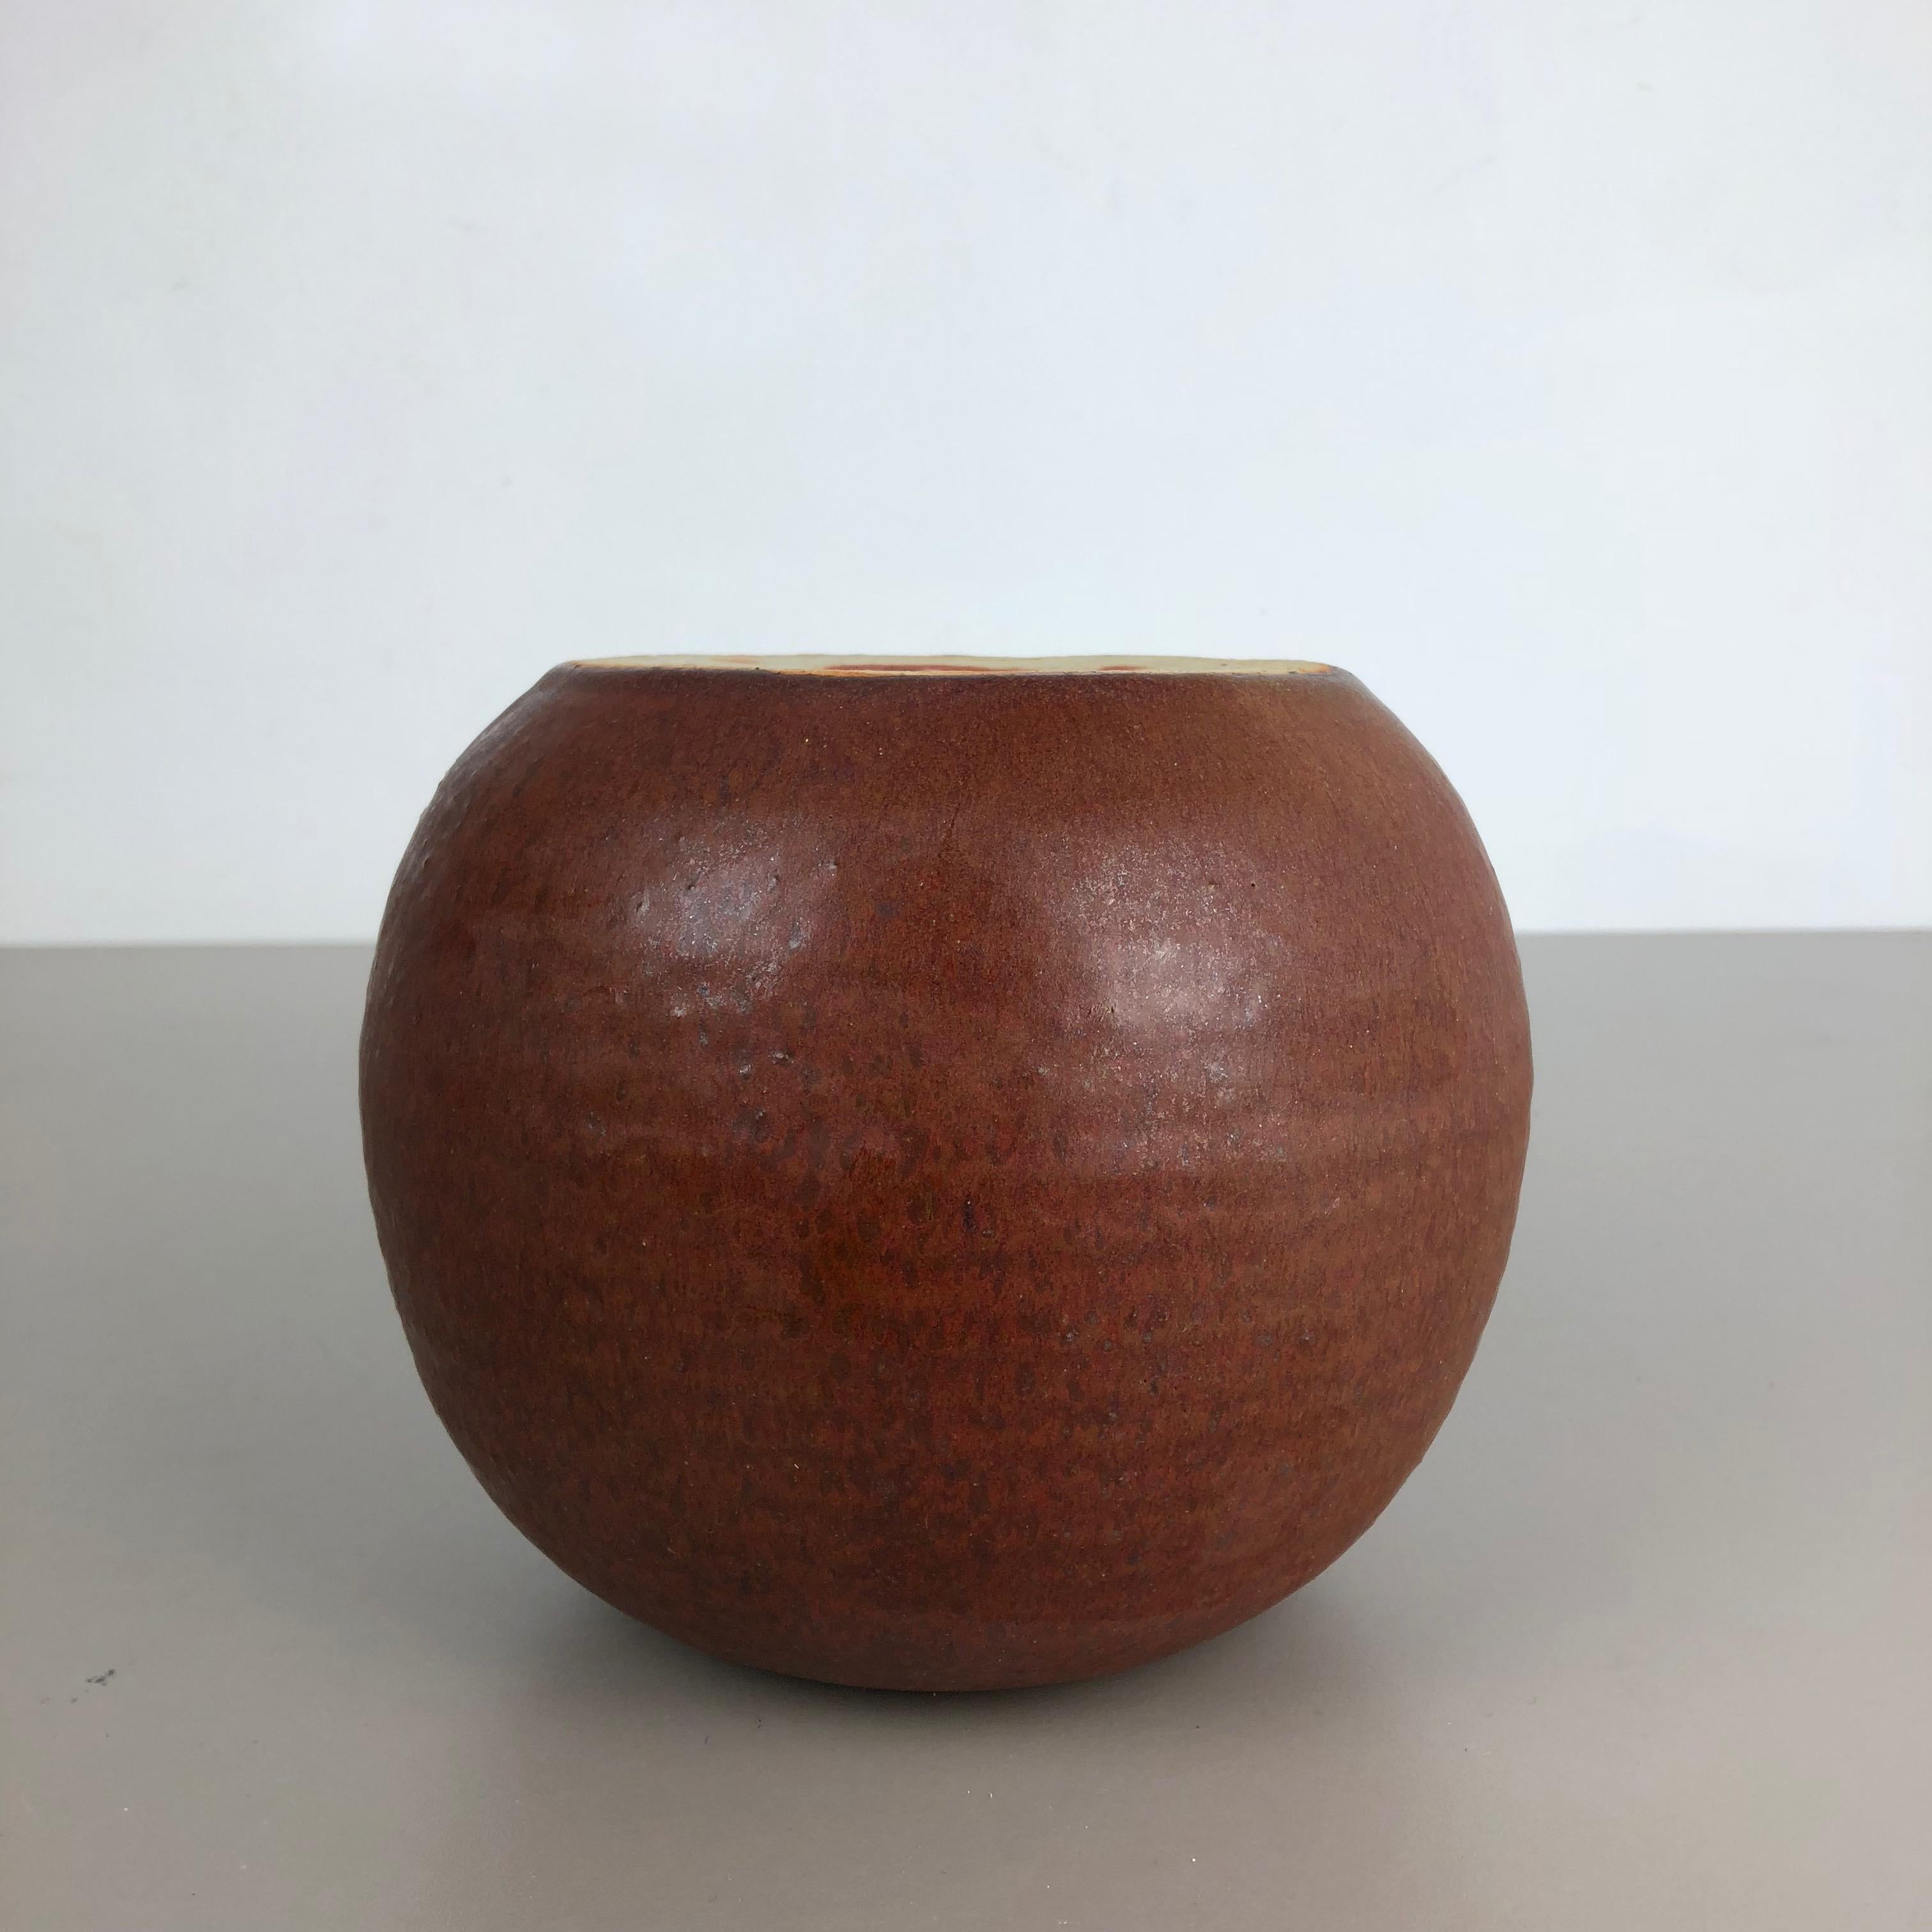 Original 1960 Ceramic Studio Pottery Vase by Piet Knepper for Mobach Netherlands For Sale 6